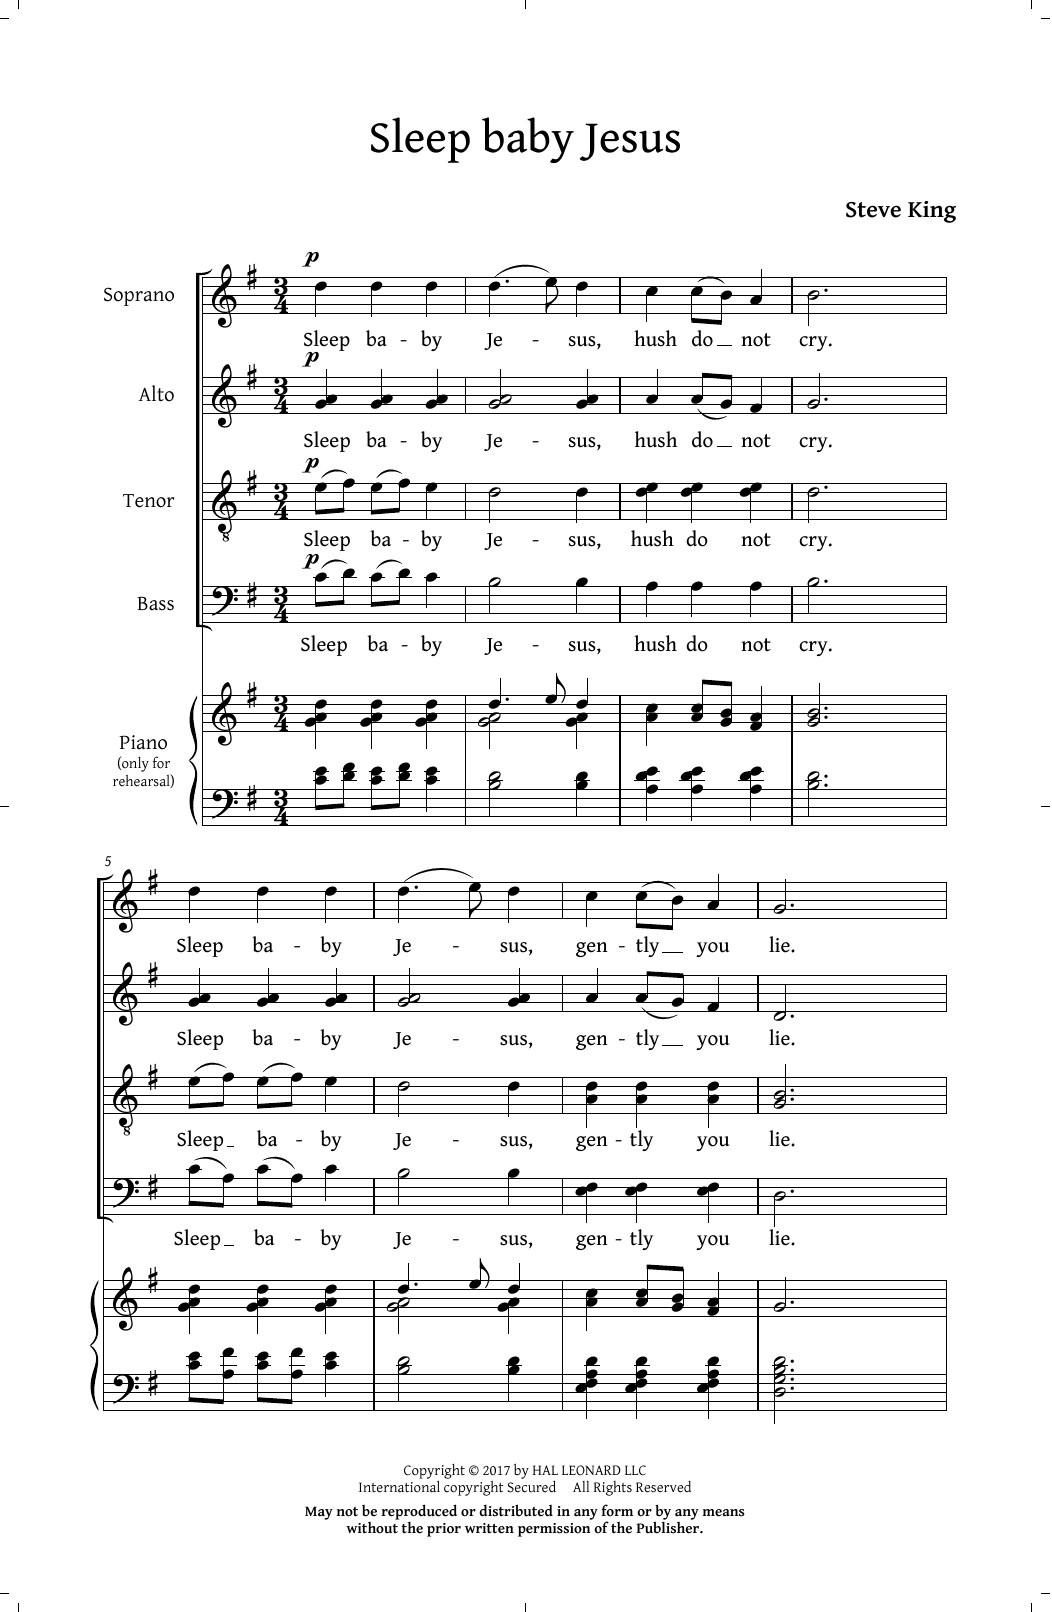 Steve King Sleep Baby Jesus Sheet Music Notes & Chords for SATB - Download or Print PDF